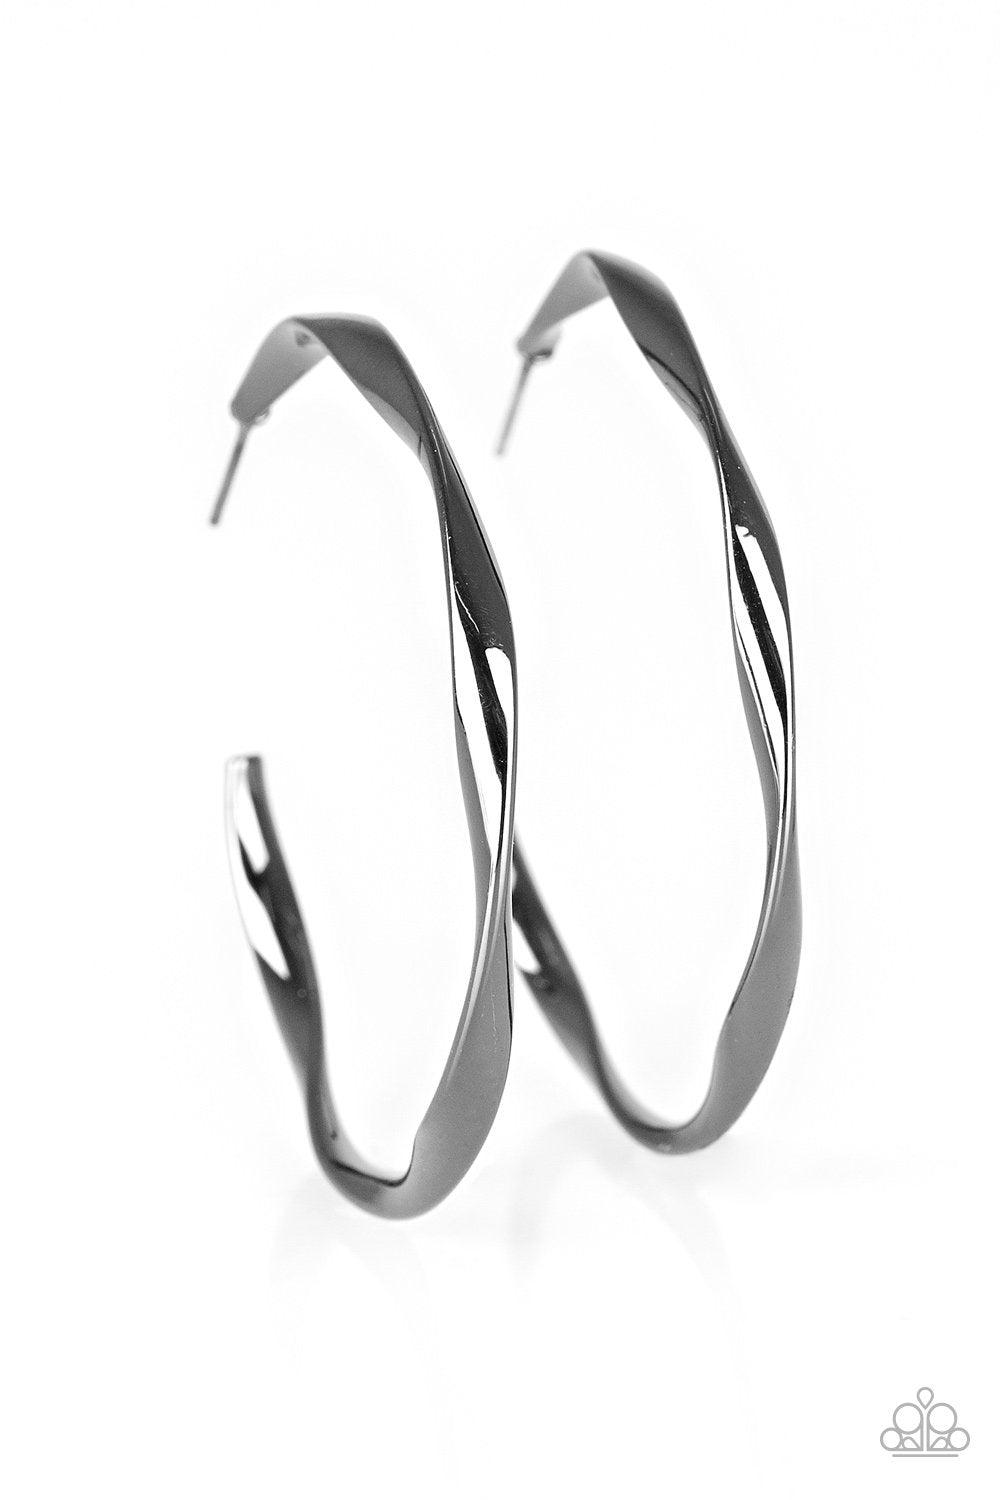 Plot Twist Gunmetal Black Hoop Earrings - Paparazzi Accessories-CarasShop.com - $5 Jewelry by Cara Jewels